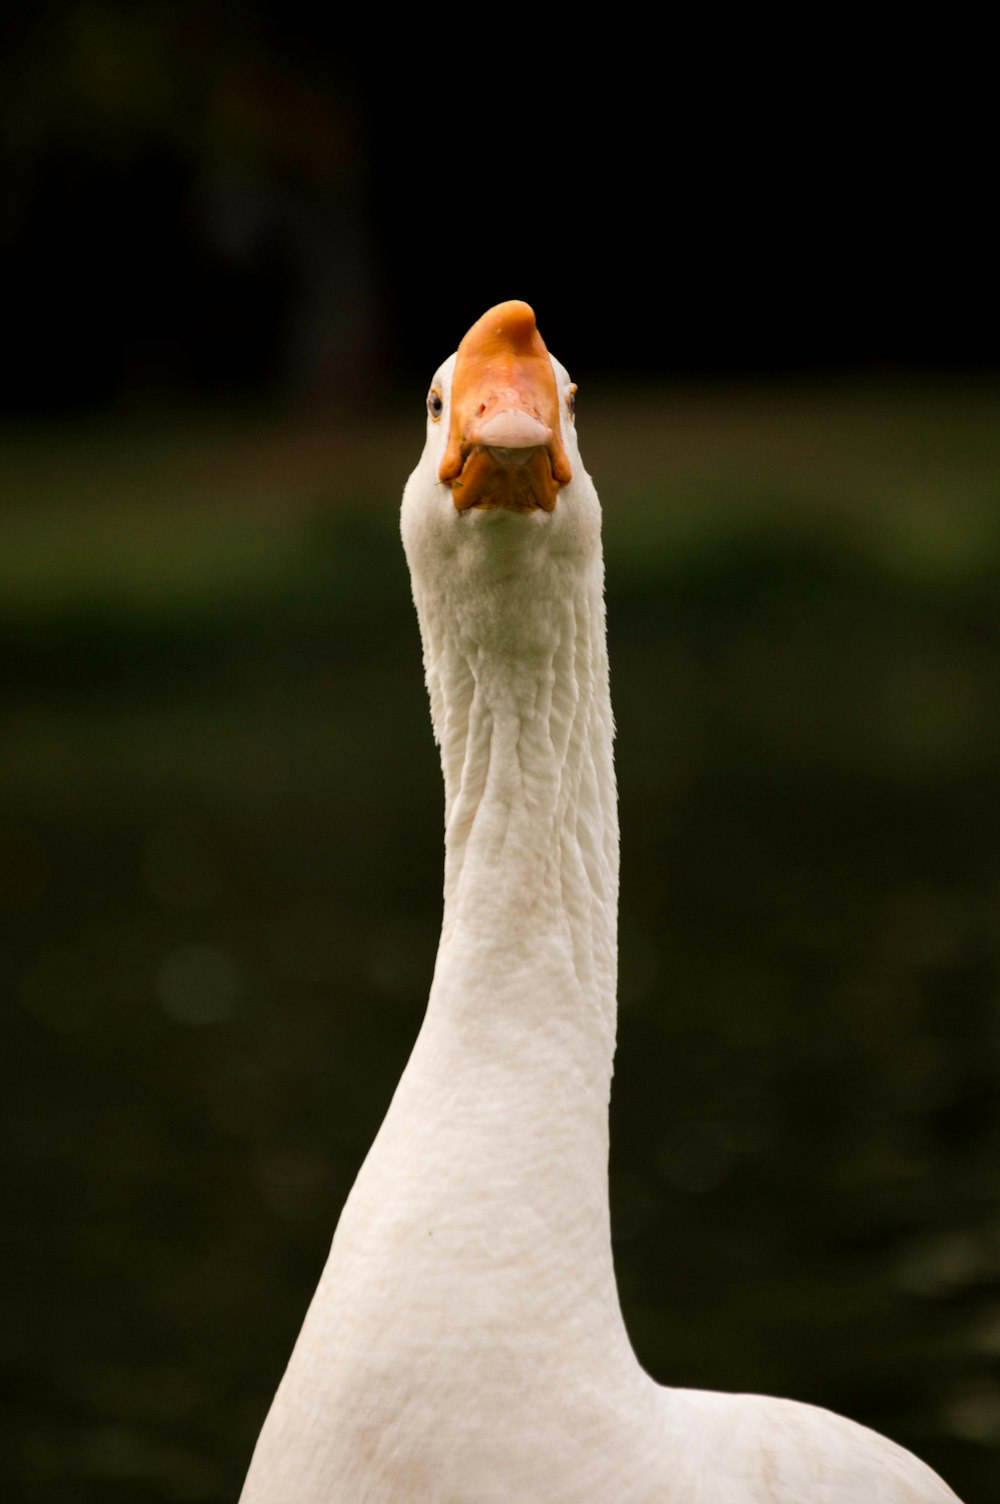 a white goose with a yellow beak